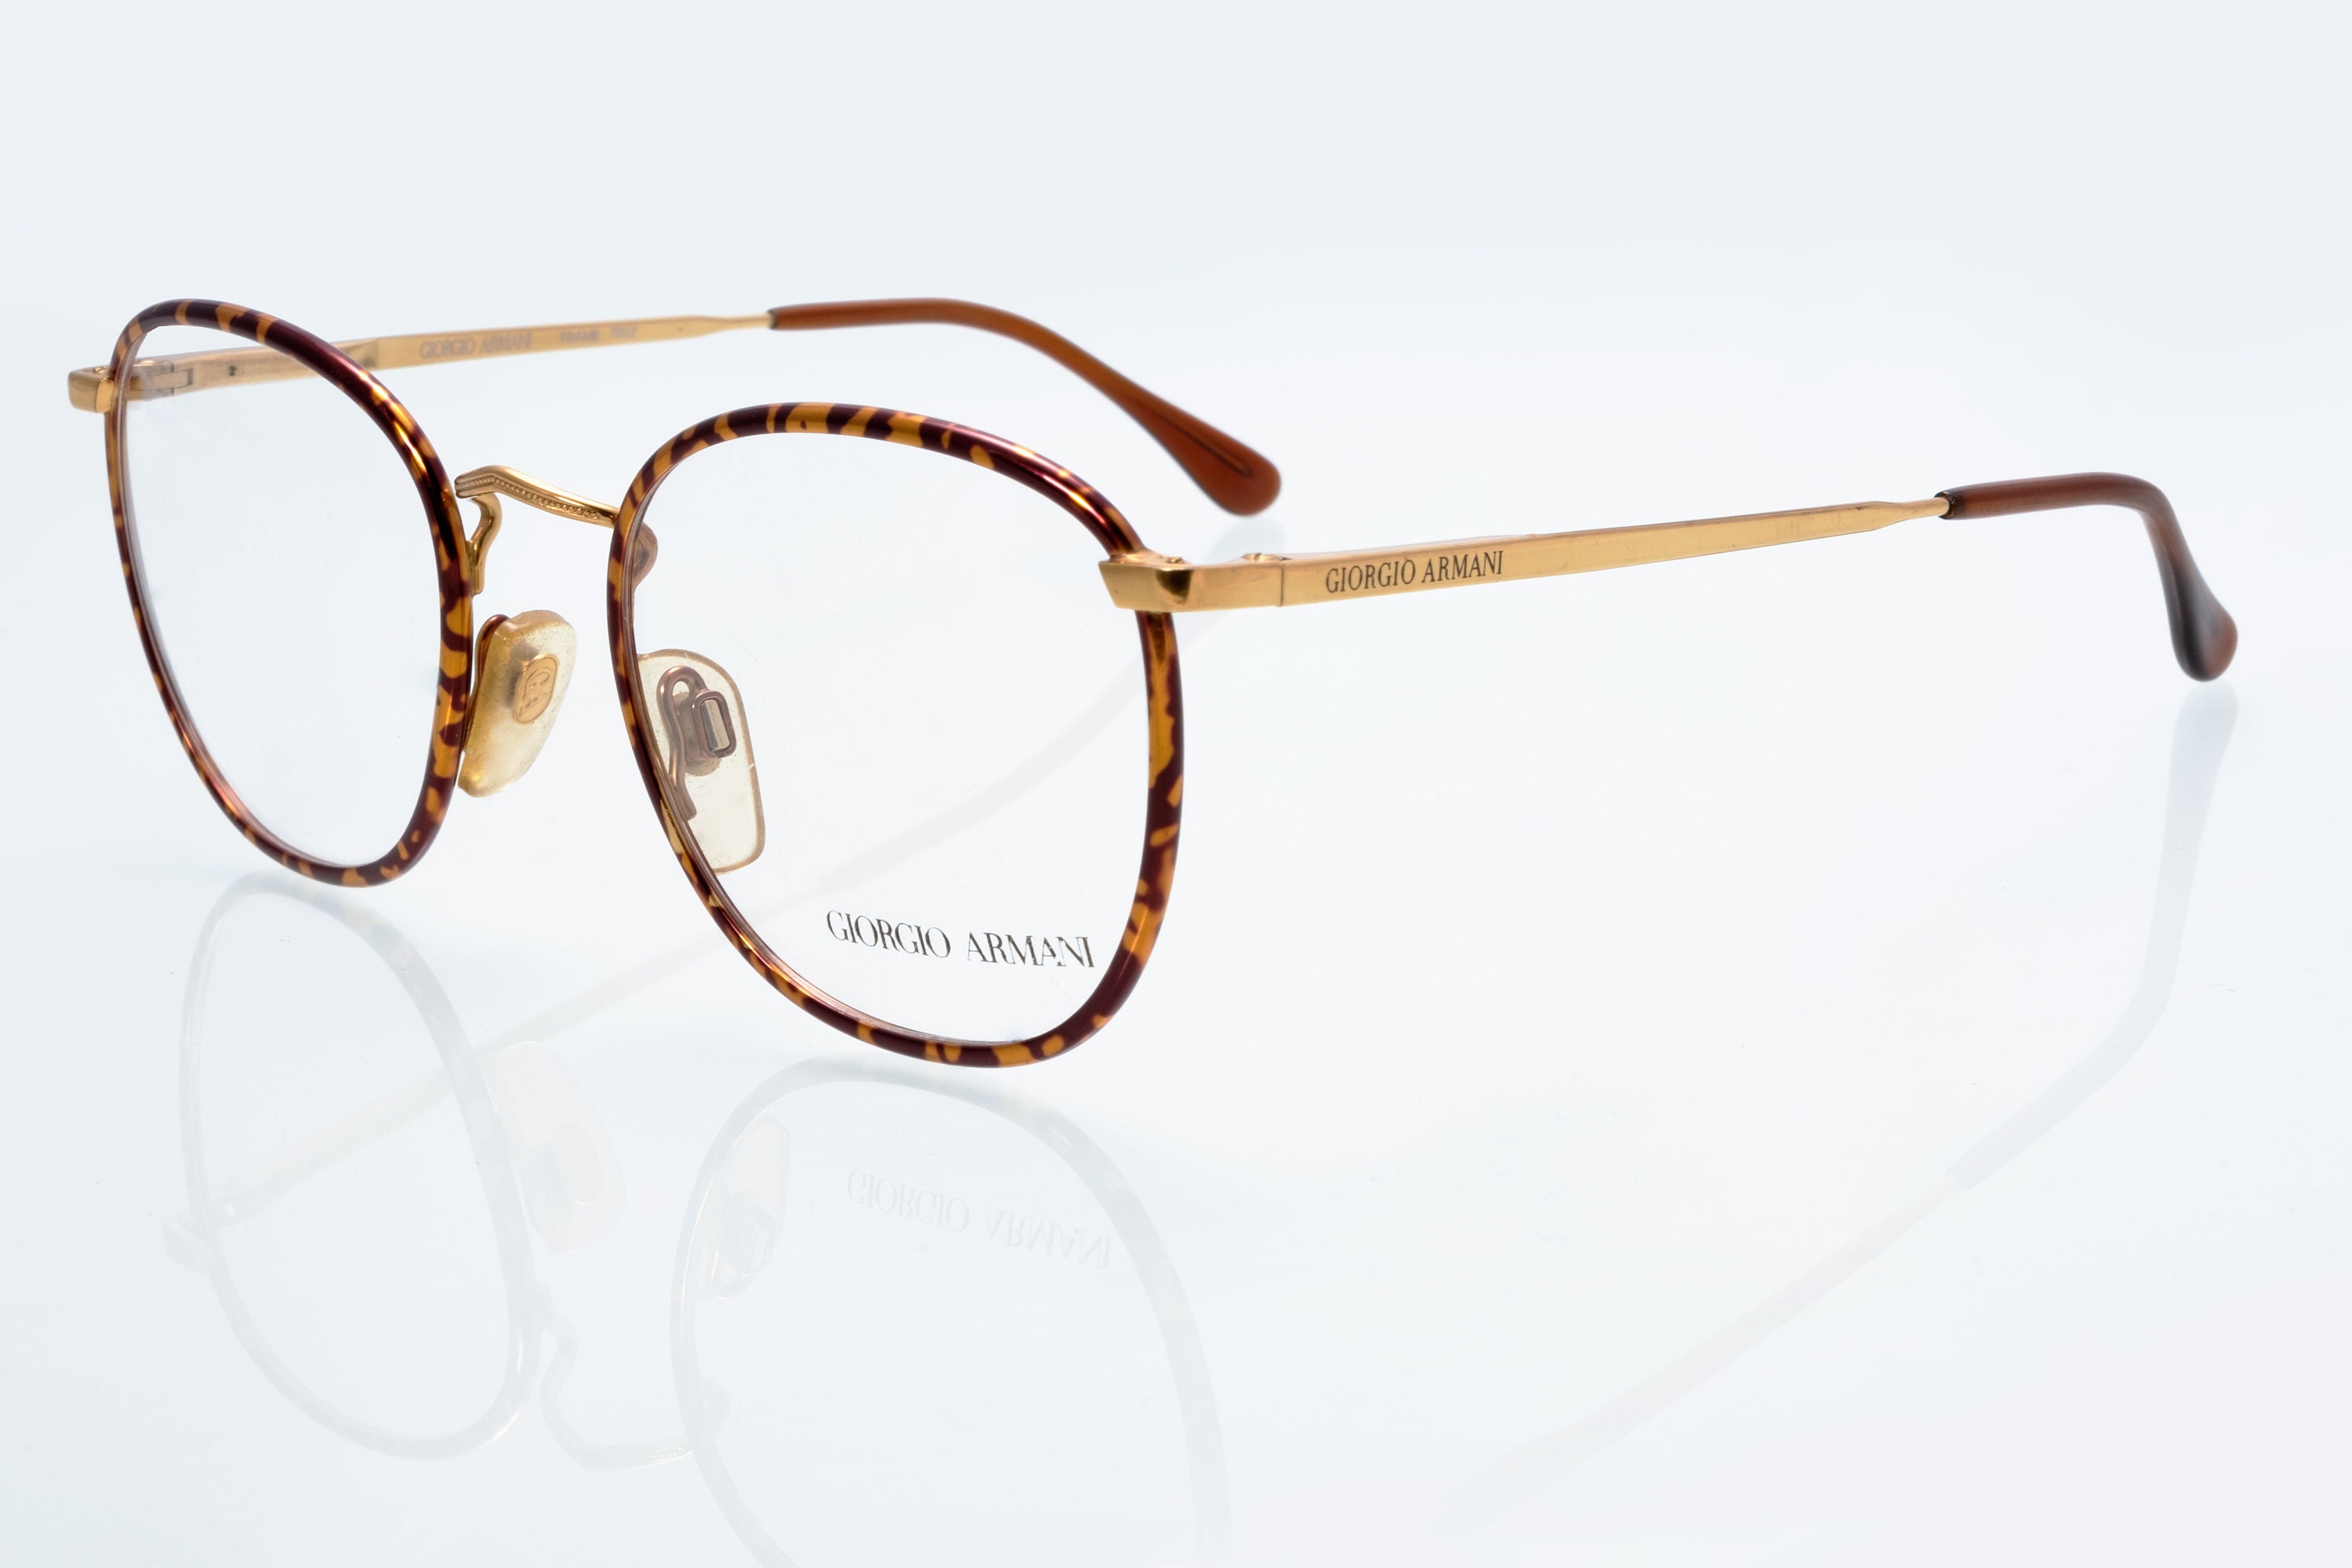 Giorgio Armani Vintage Eyeglasses Gold Tortoise Round - Etsy